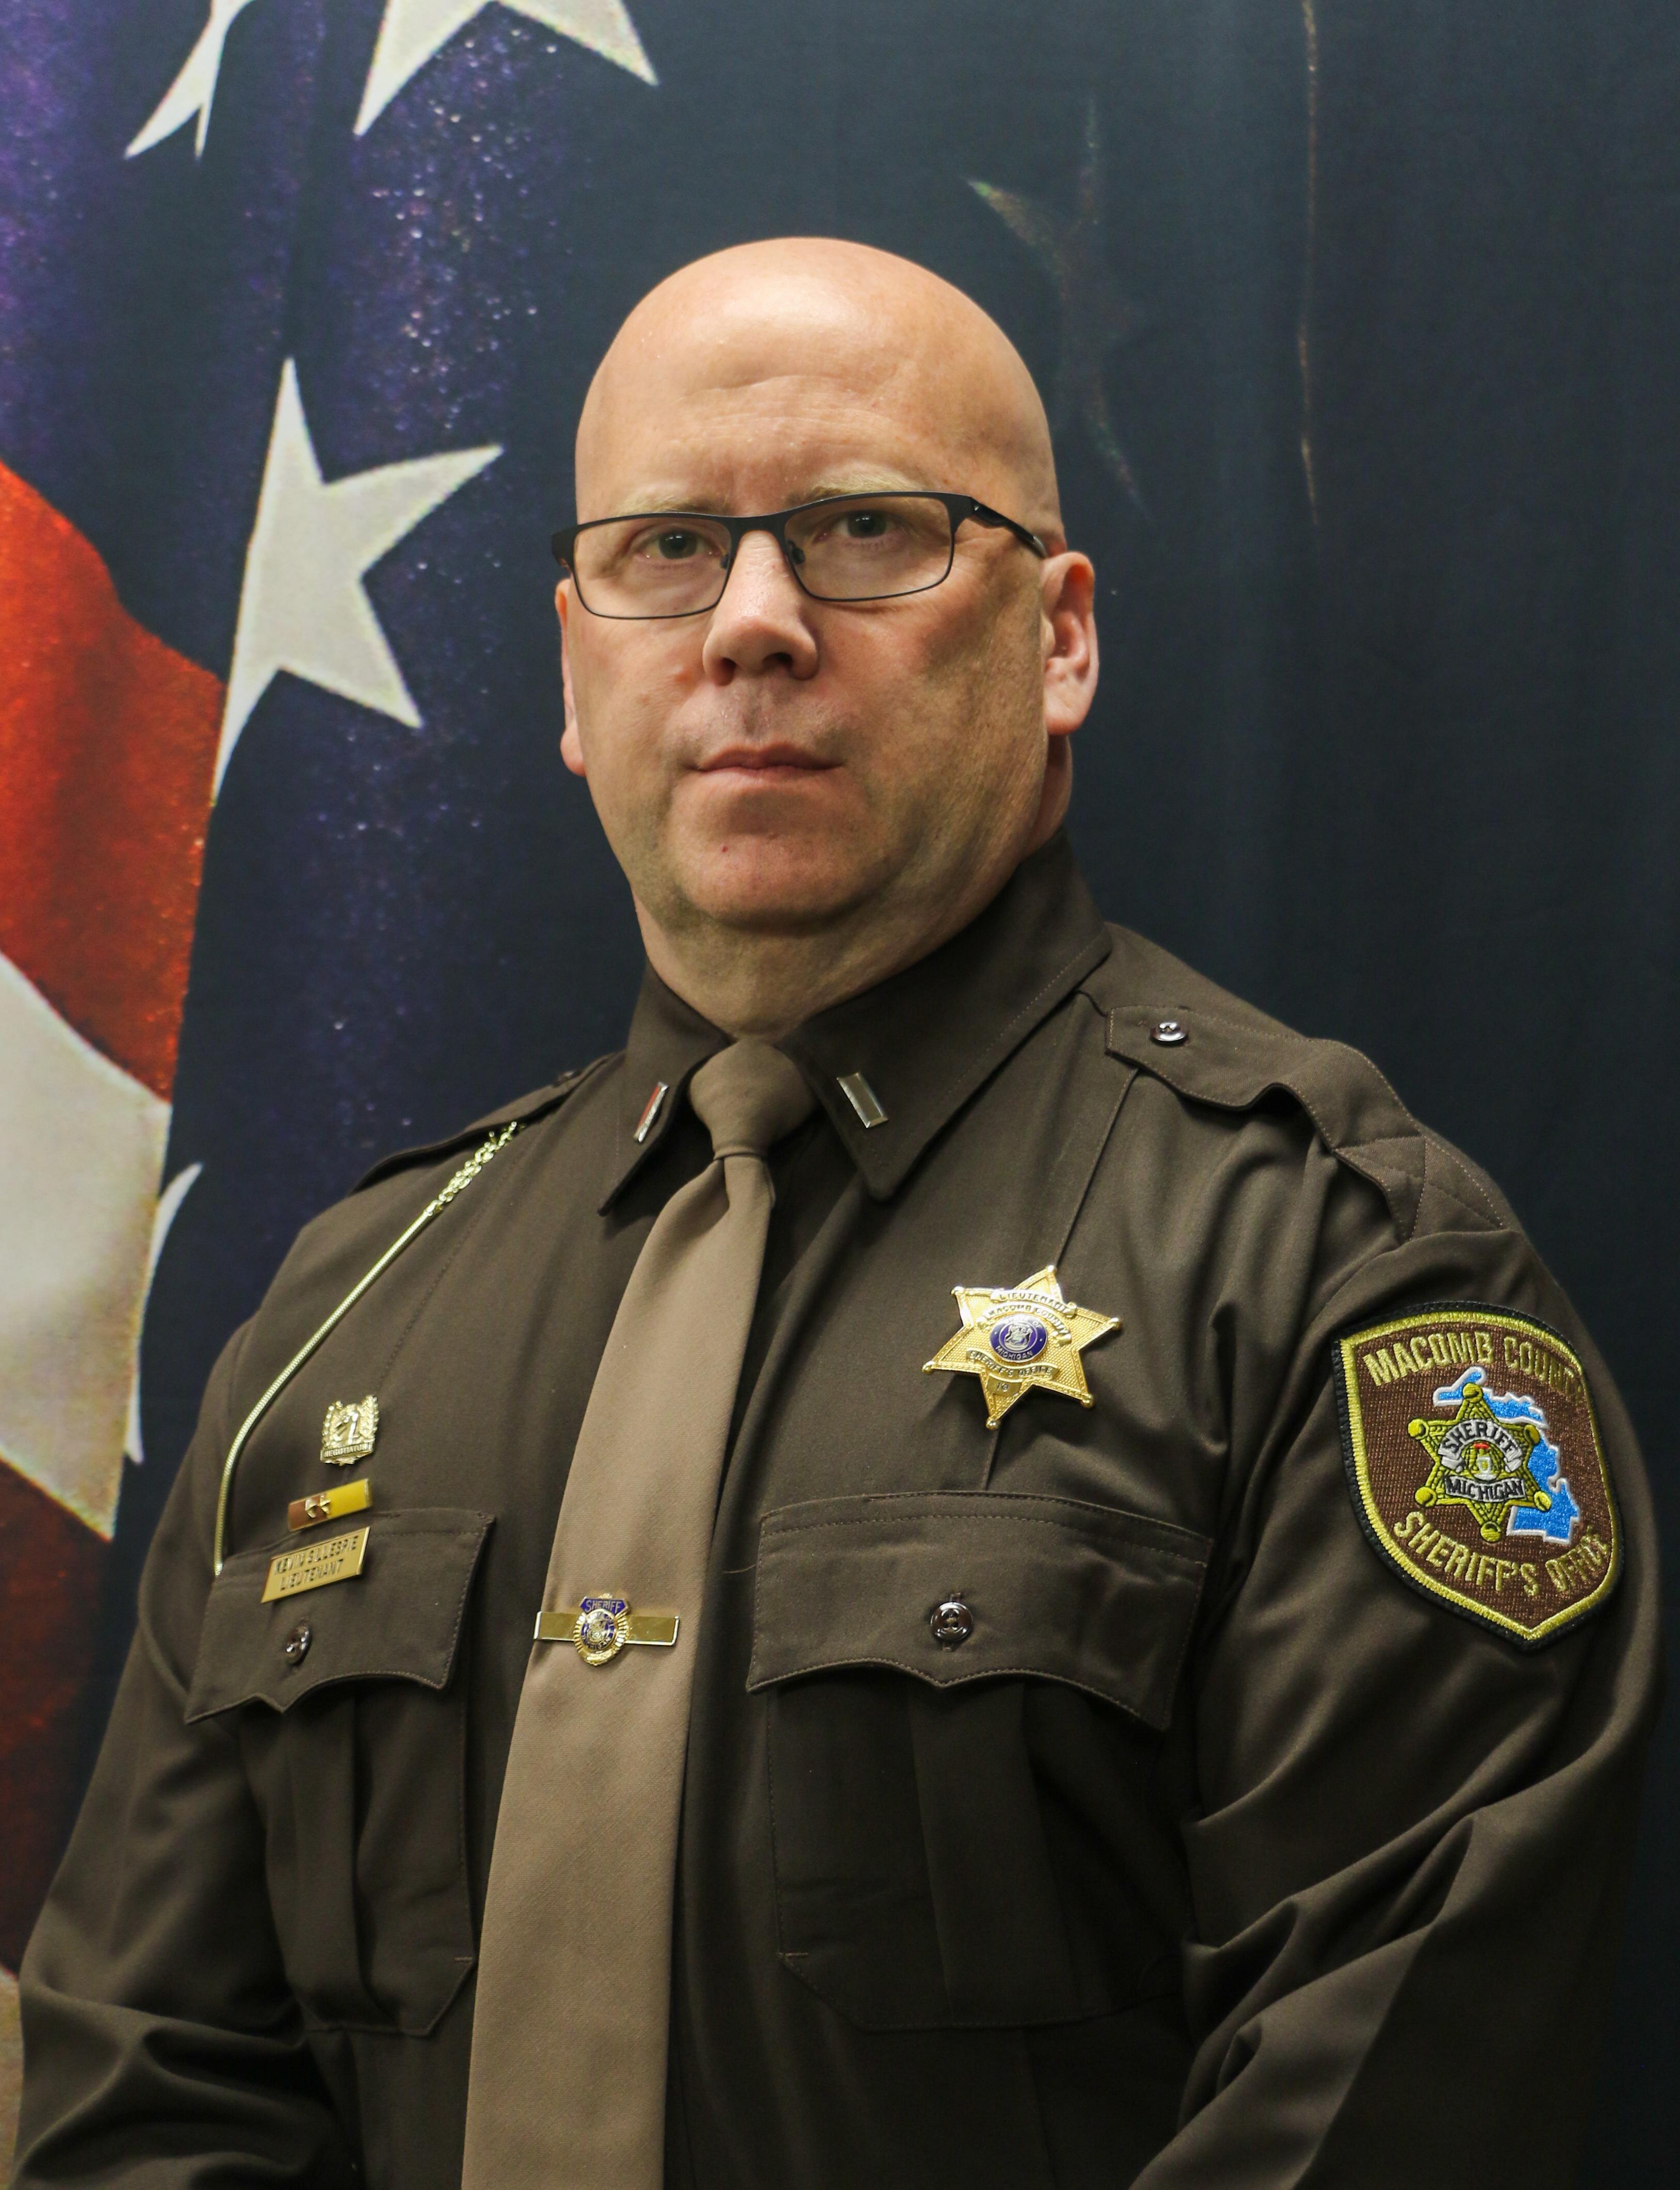 Sheriff - Lieutenant Gillespie